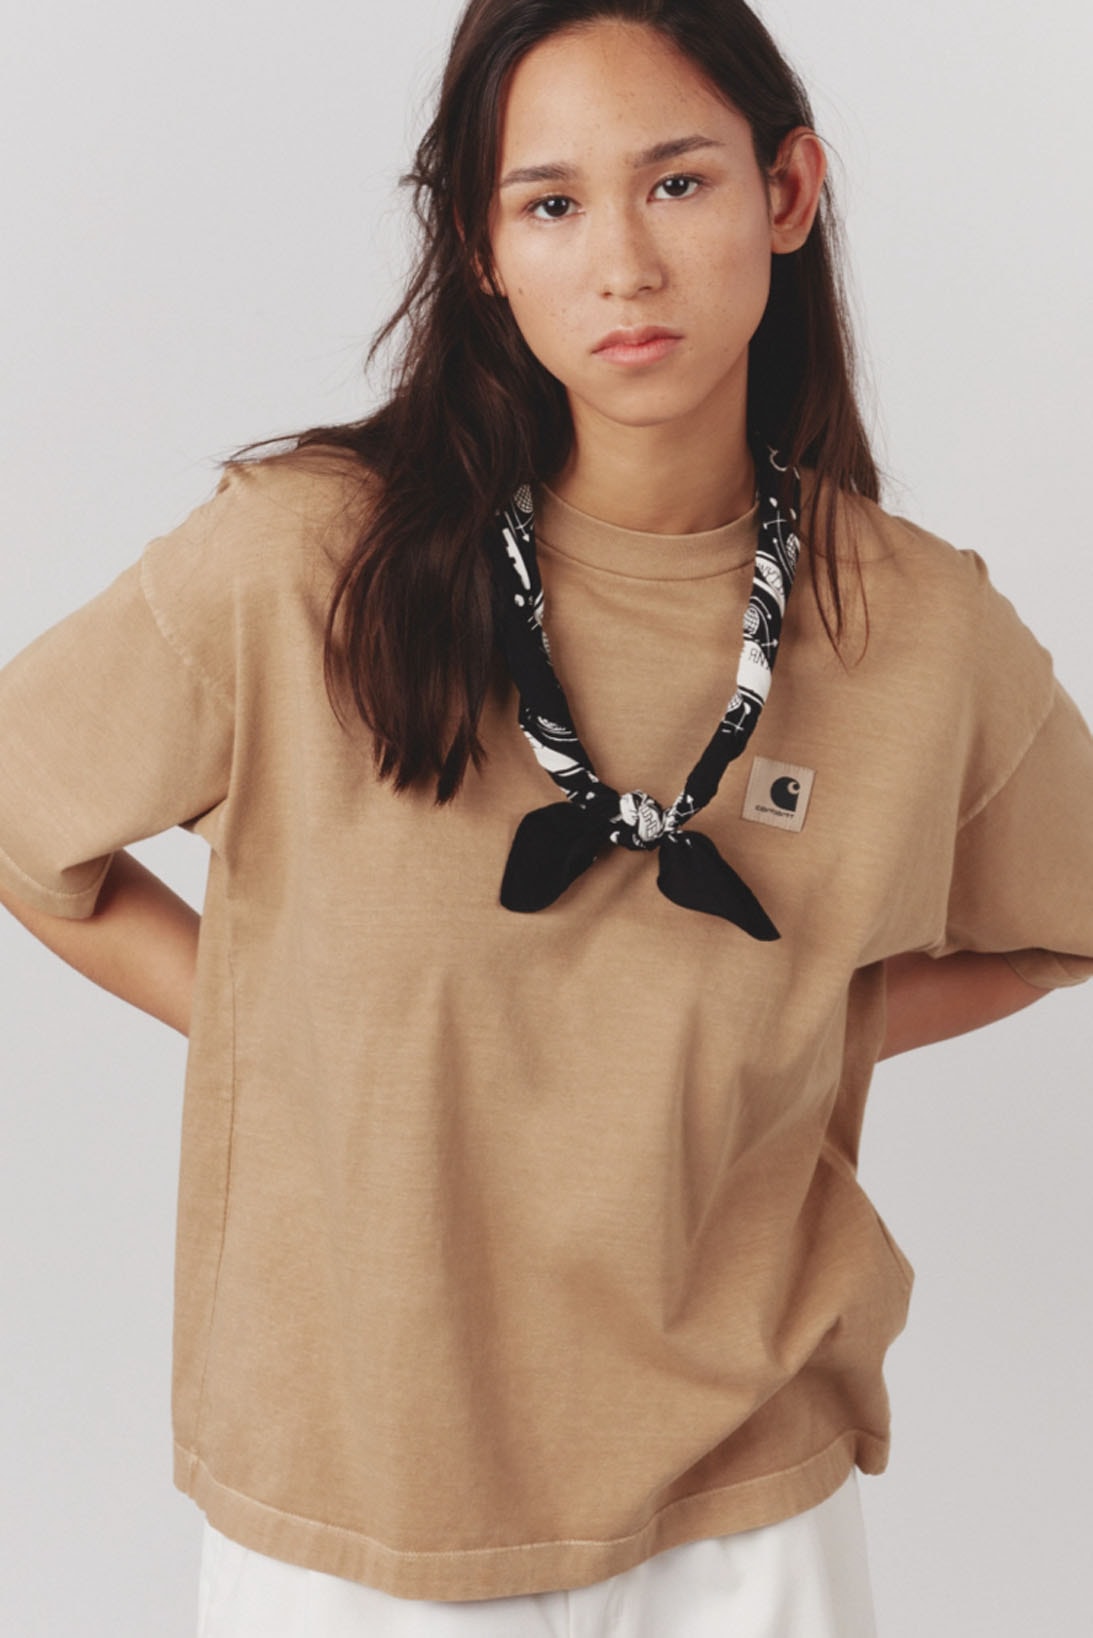 Carhartt WIP Spring Summer Women's Collection Denim Jackets Hoodies Accessories